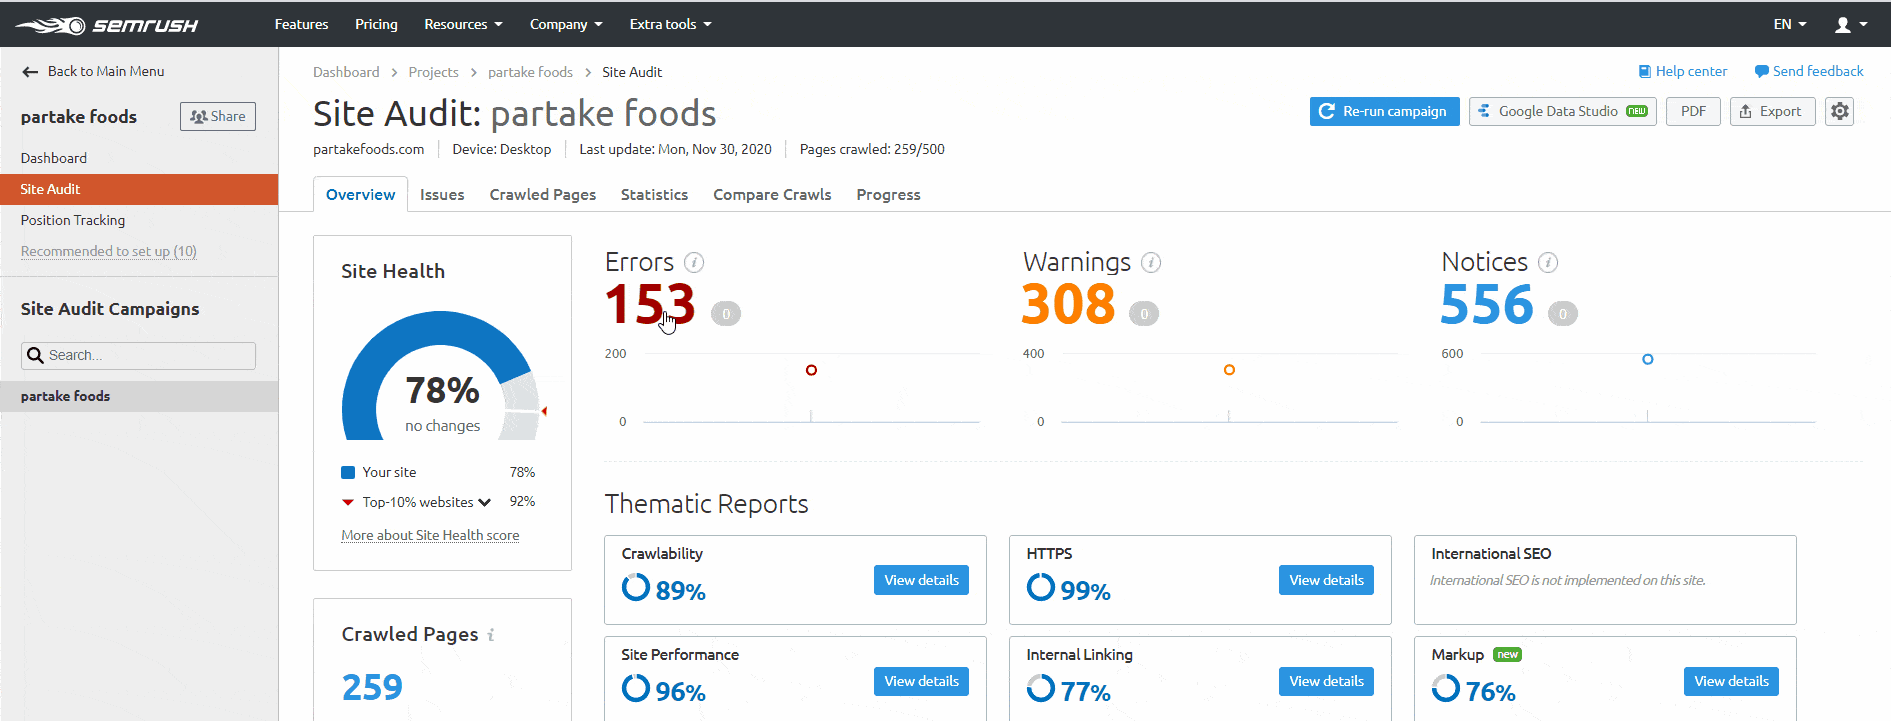 Partake Foods site audit errors